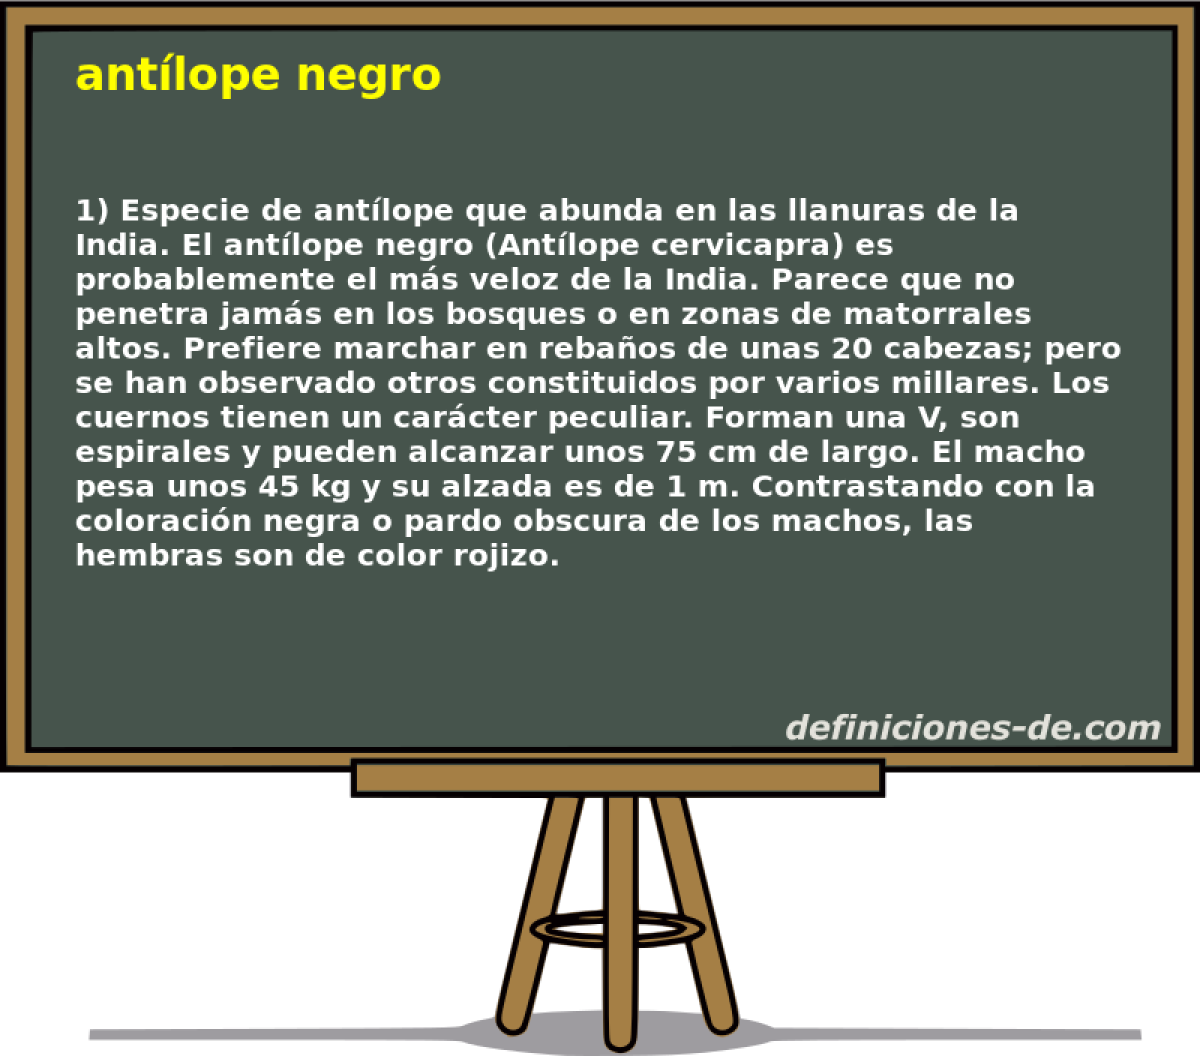 antlope negro 